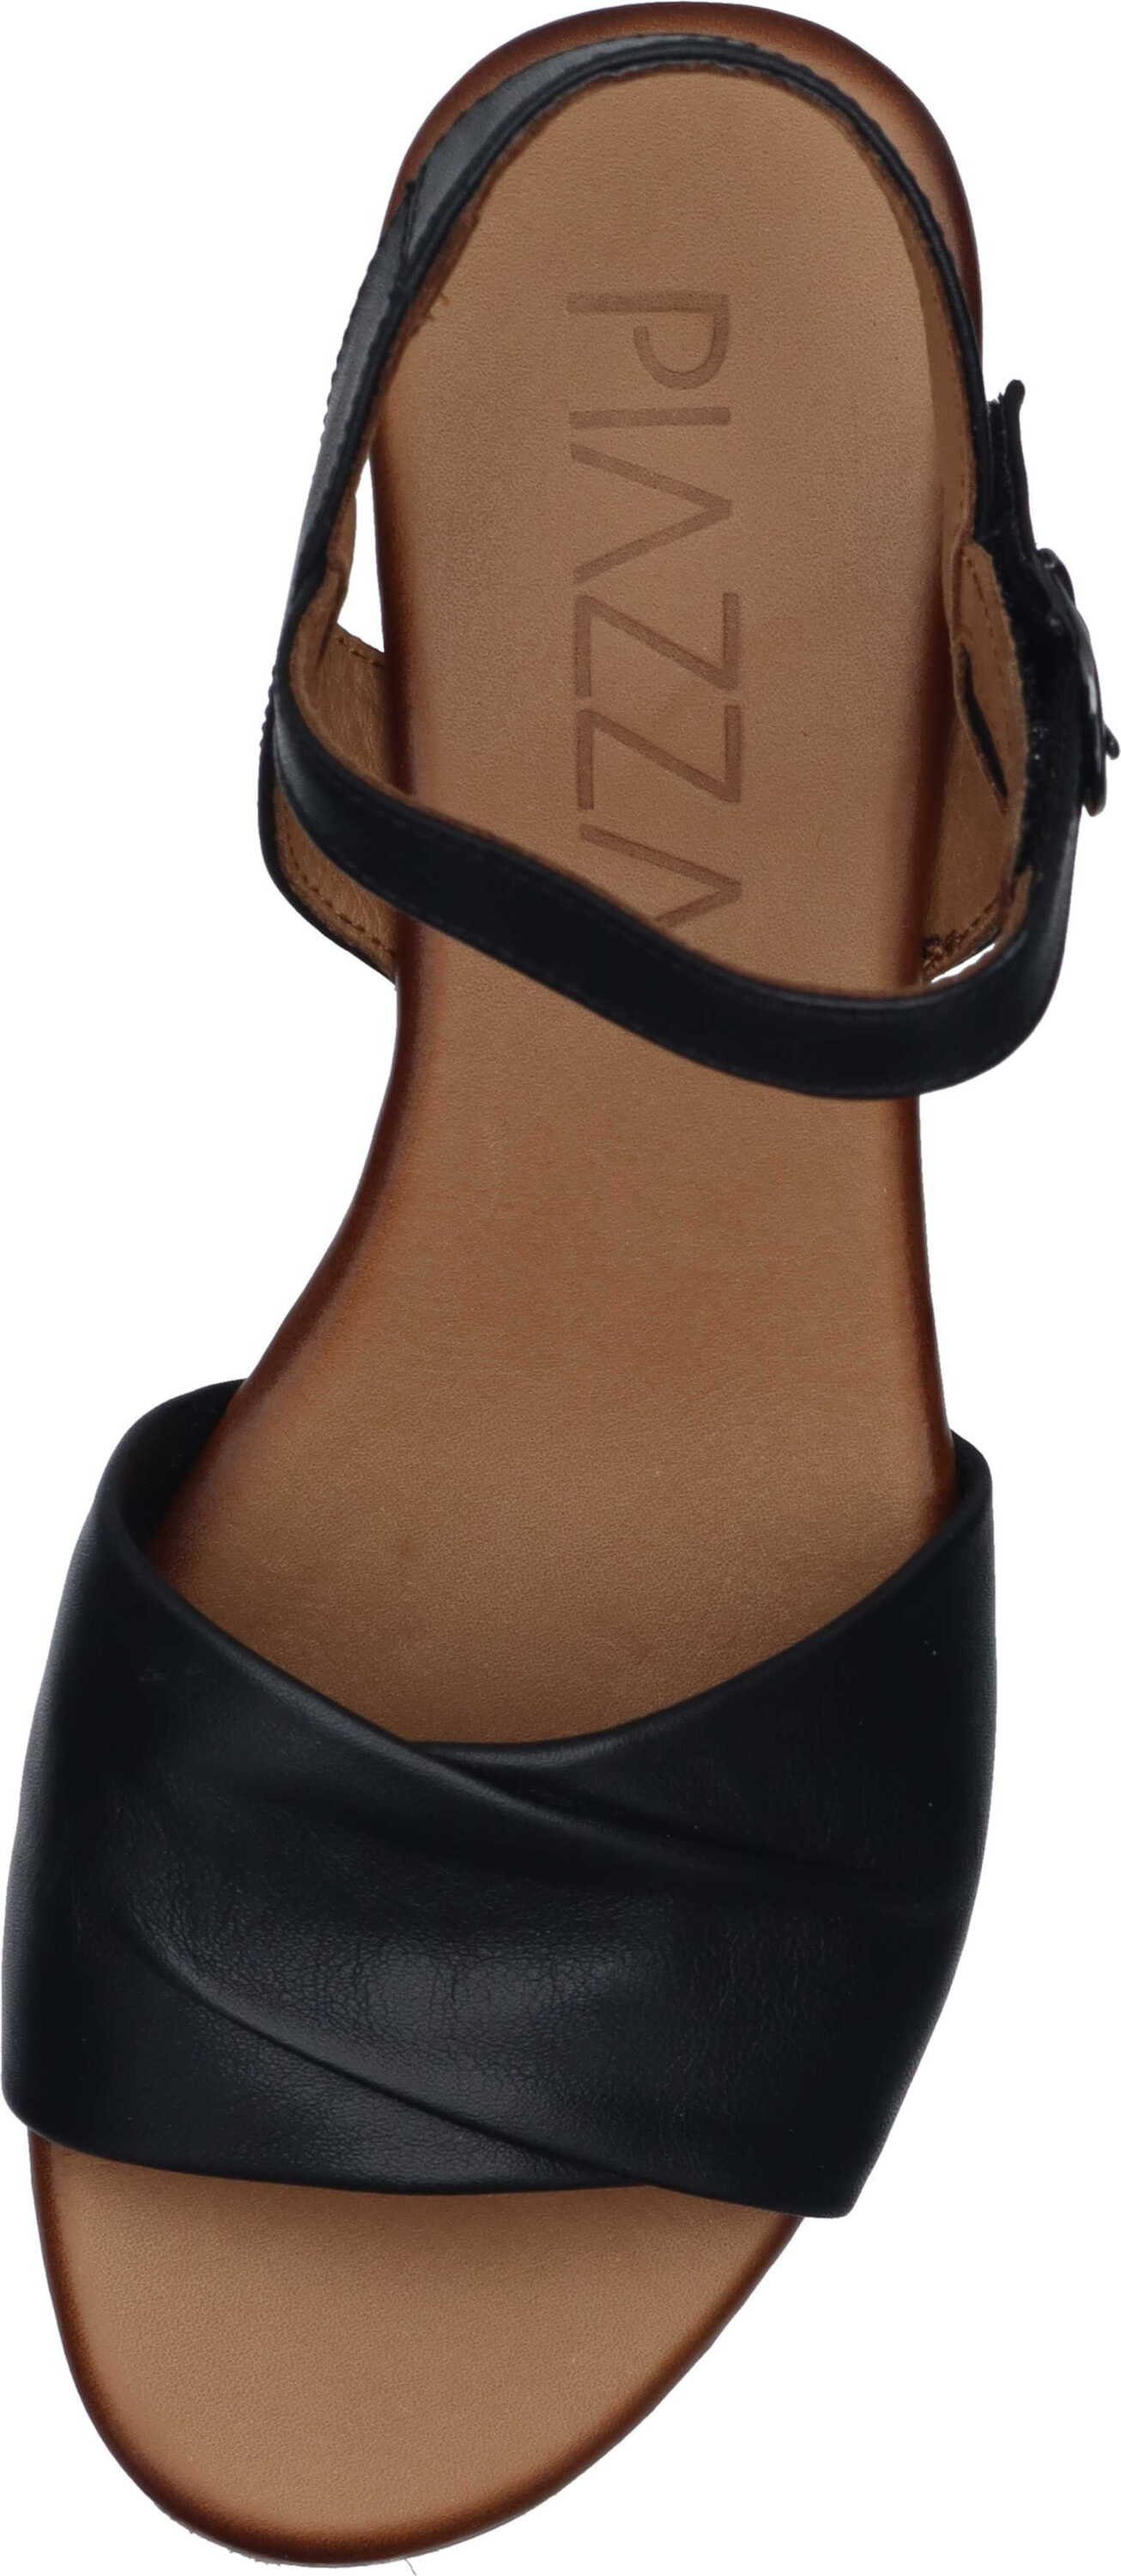 echtem schwarz Sandalen Sandalette Piazza aus Leder